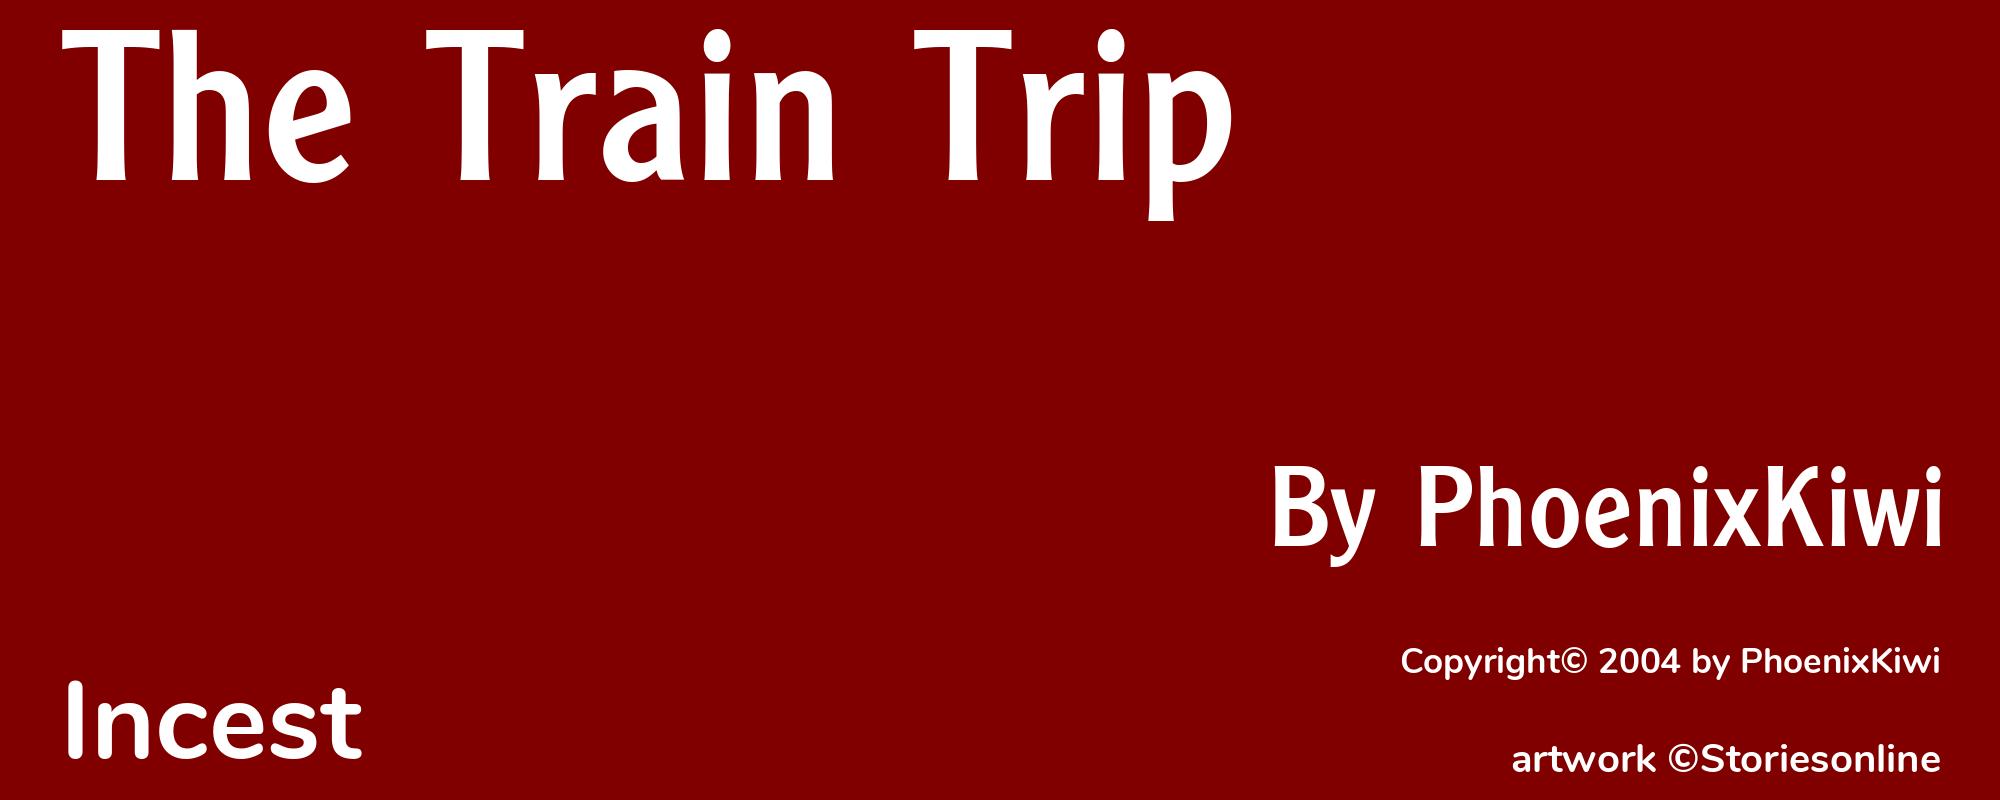 The Train Trip - Cover